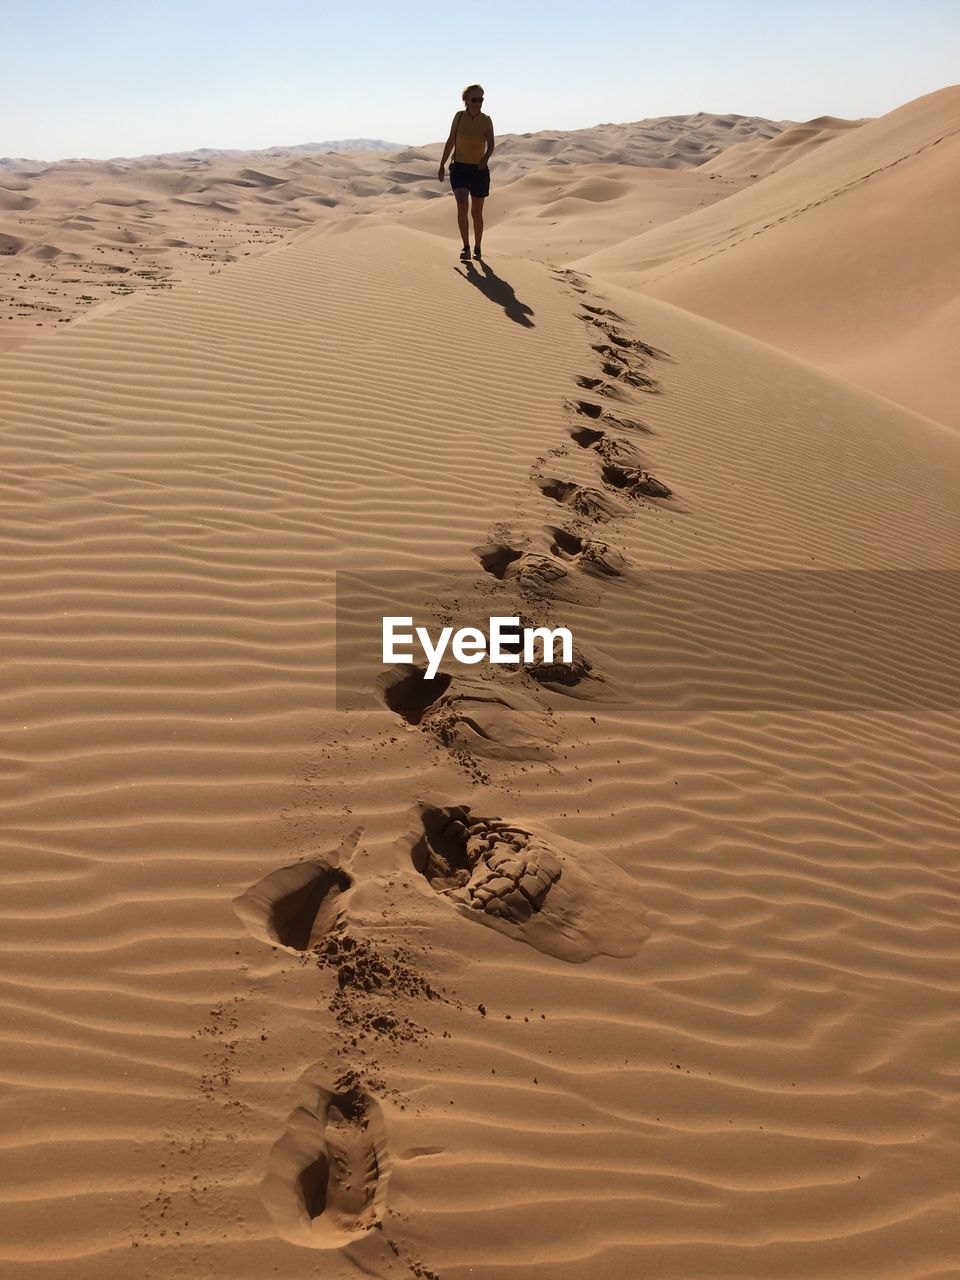 Woman walking on sand dune at desert